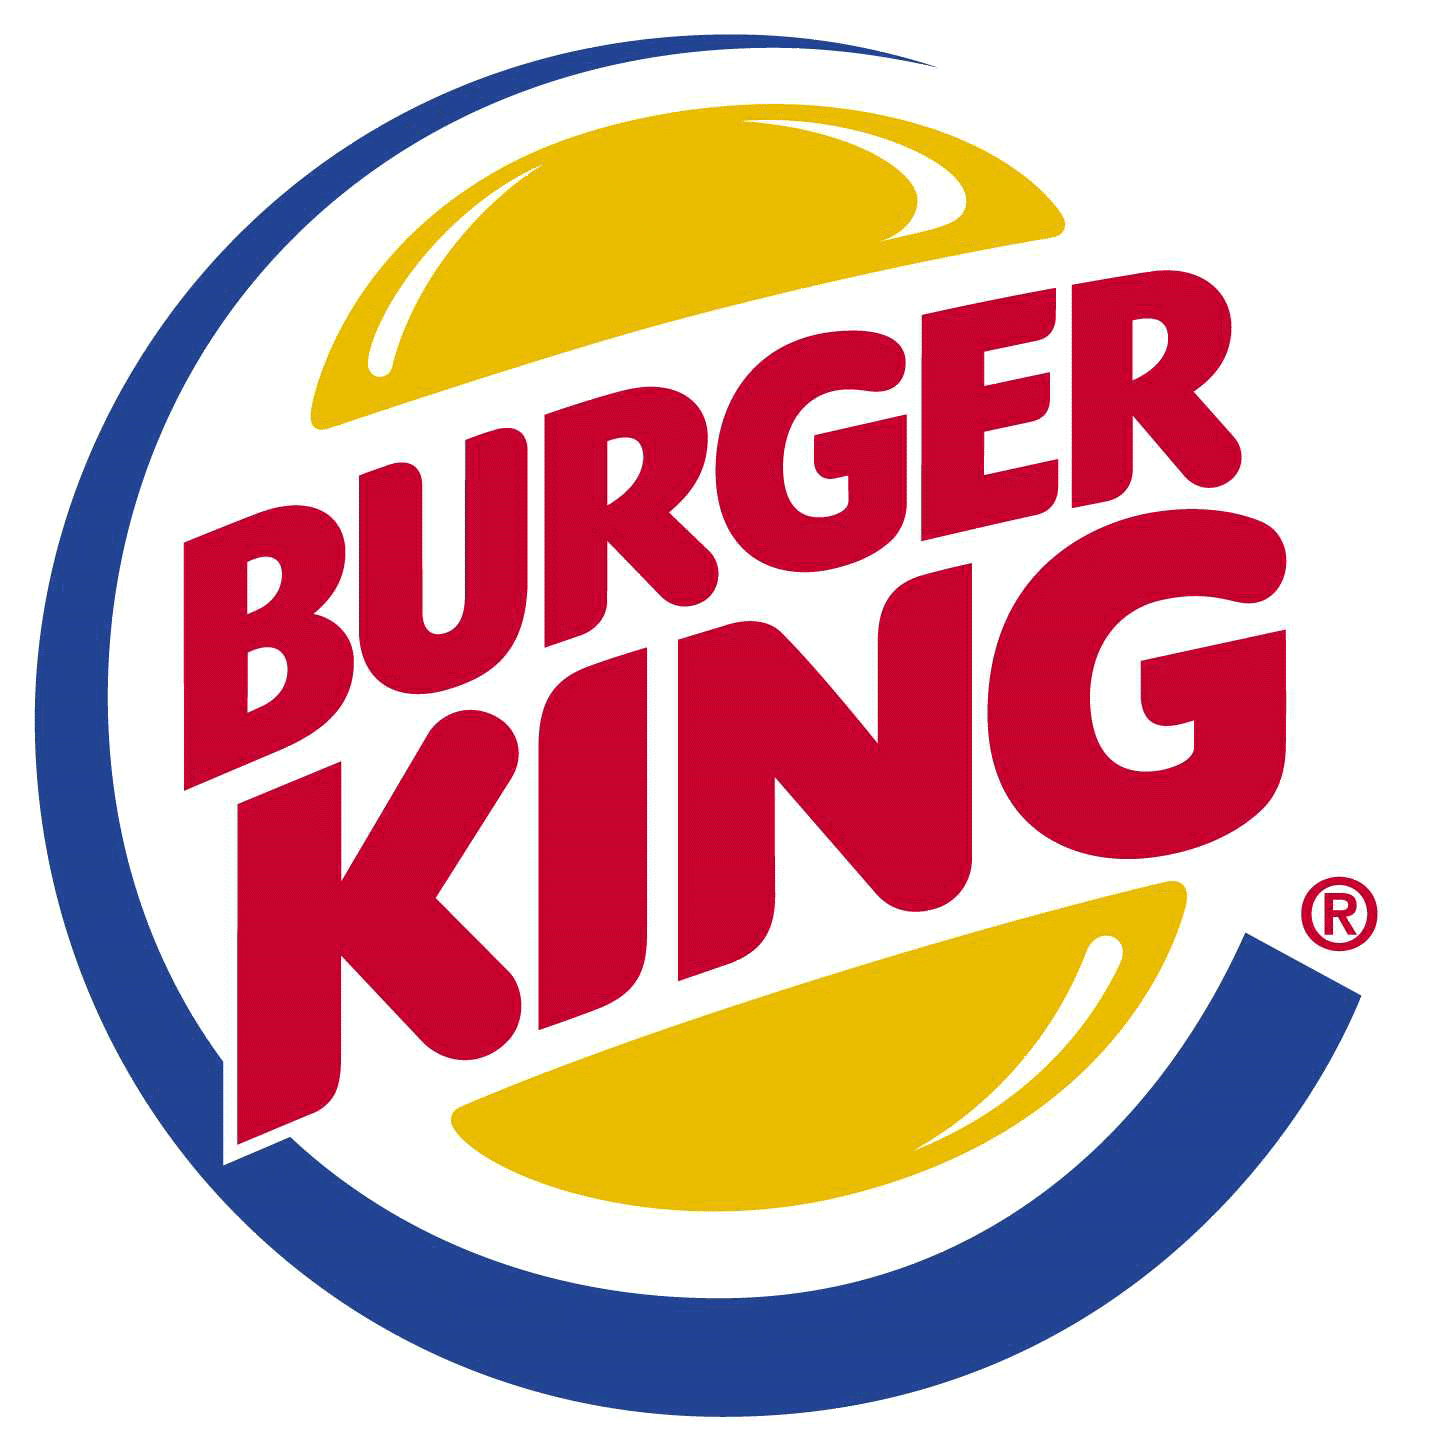 Resturants Red Hamburger Logo - BURGER KING®, often abbreviated as BK, is a global chain